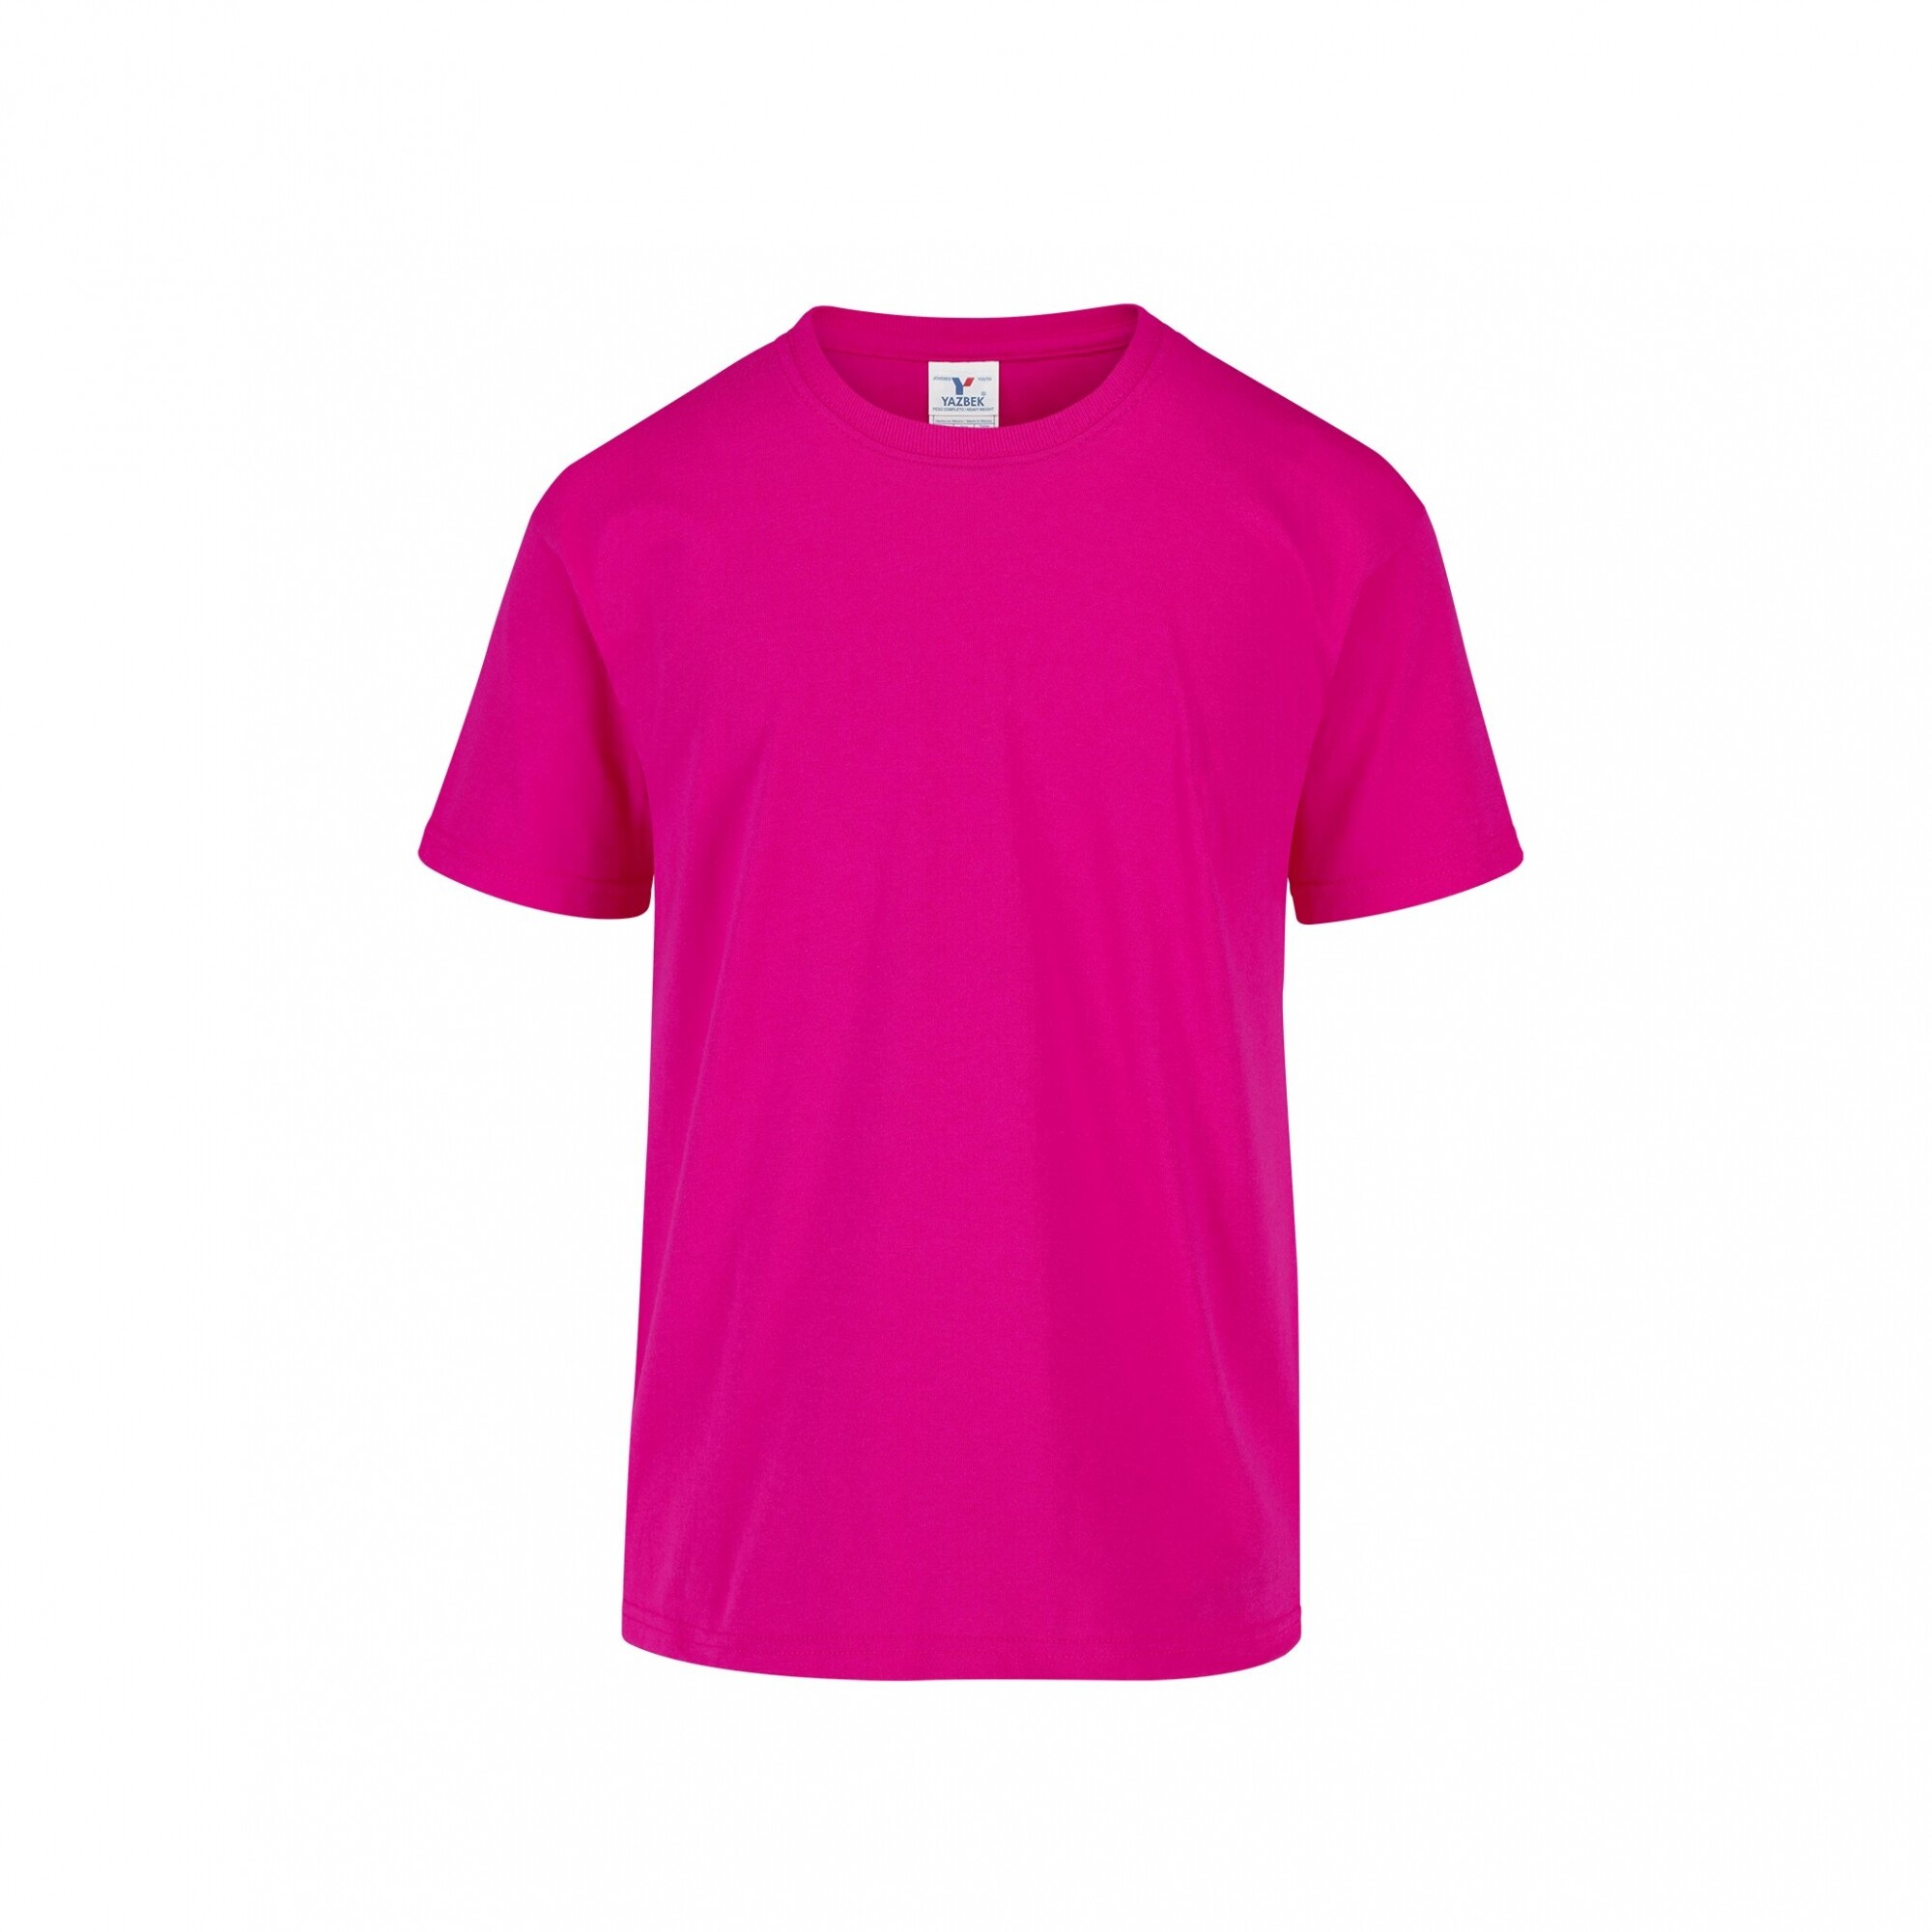 Irabazi Arte - Camiseta Rosa